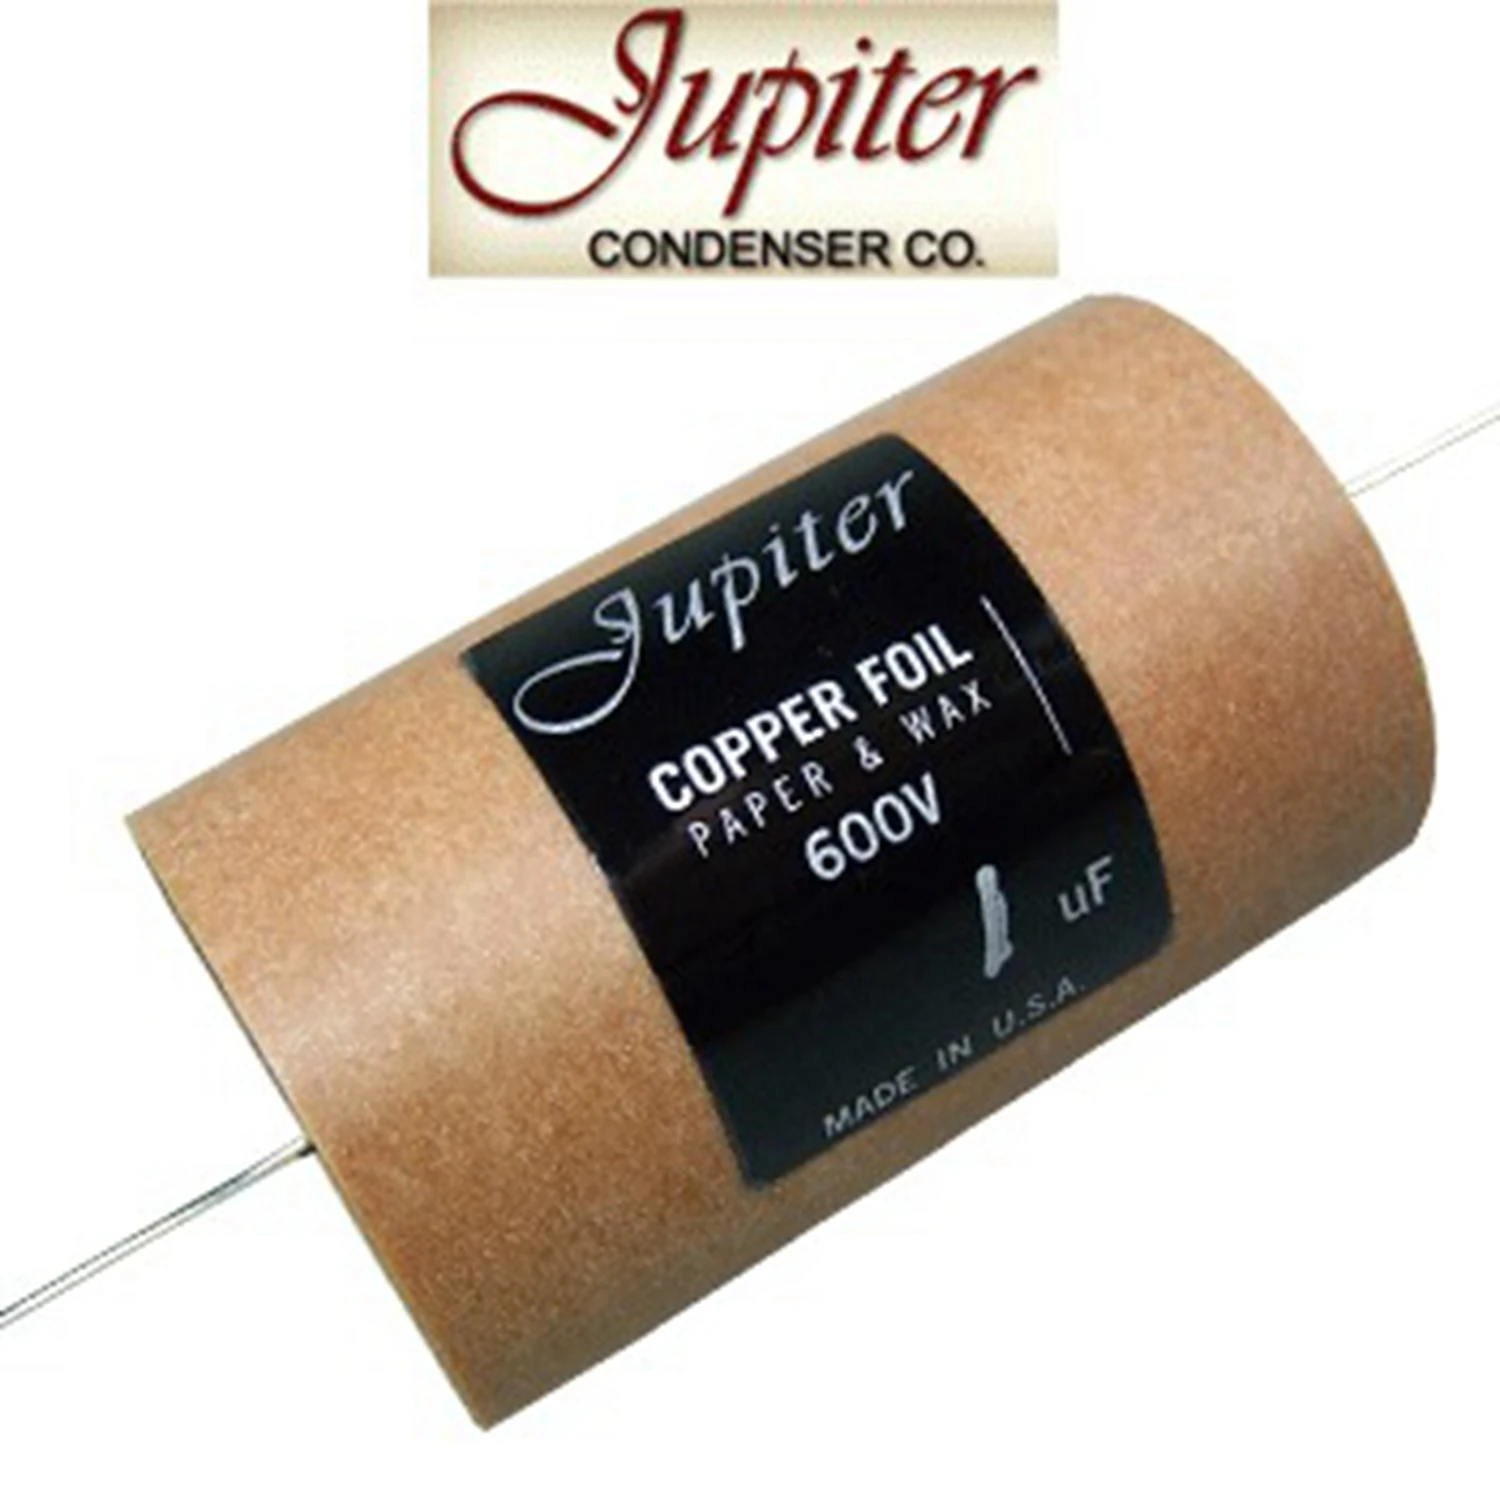 1pcs Original American jupiter Copper Foil Paper & Wax Capacitors series 5% 80C 100V/400V/600V Audio capacitor free shipping 1pcs new original genuine d13009k e13009l j13009 directly plugged into to 247 12a 400v